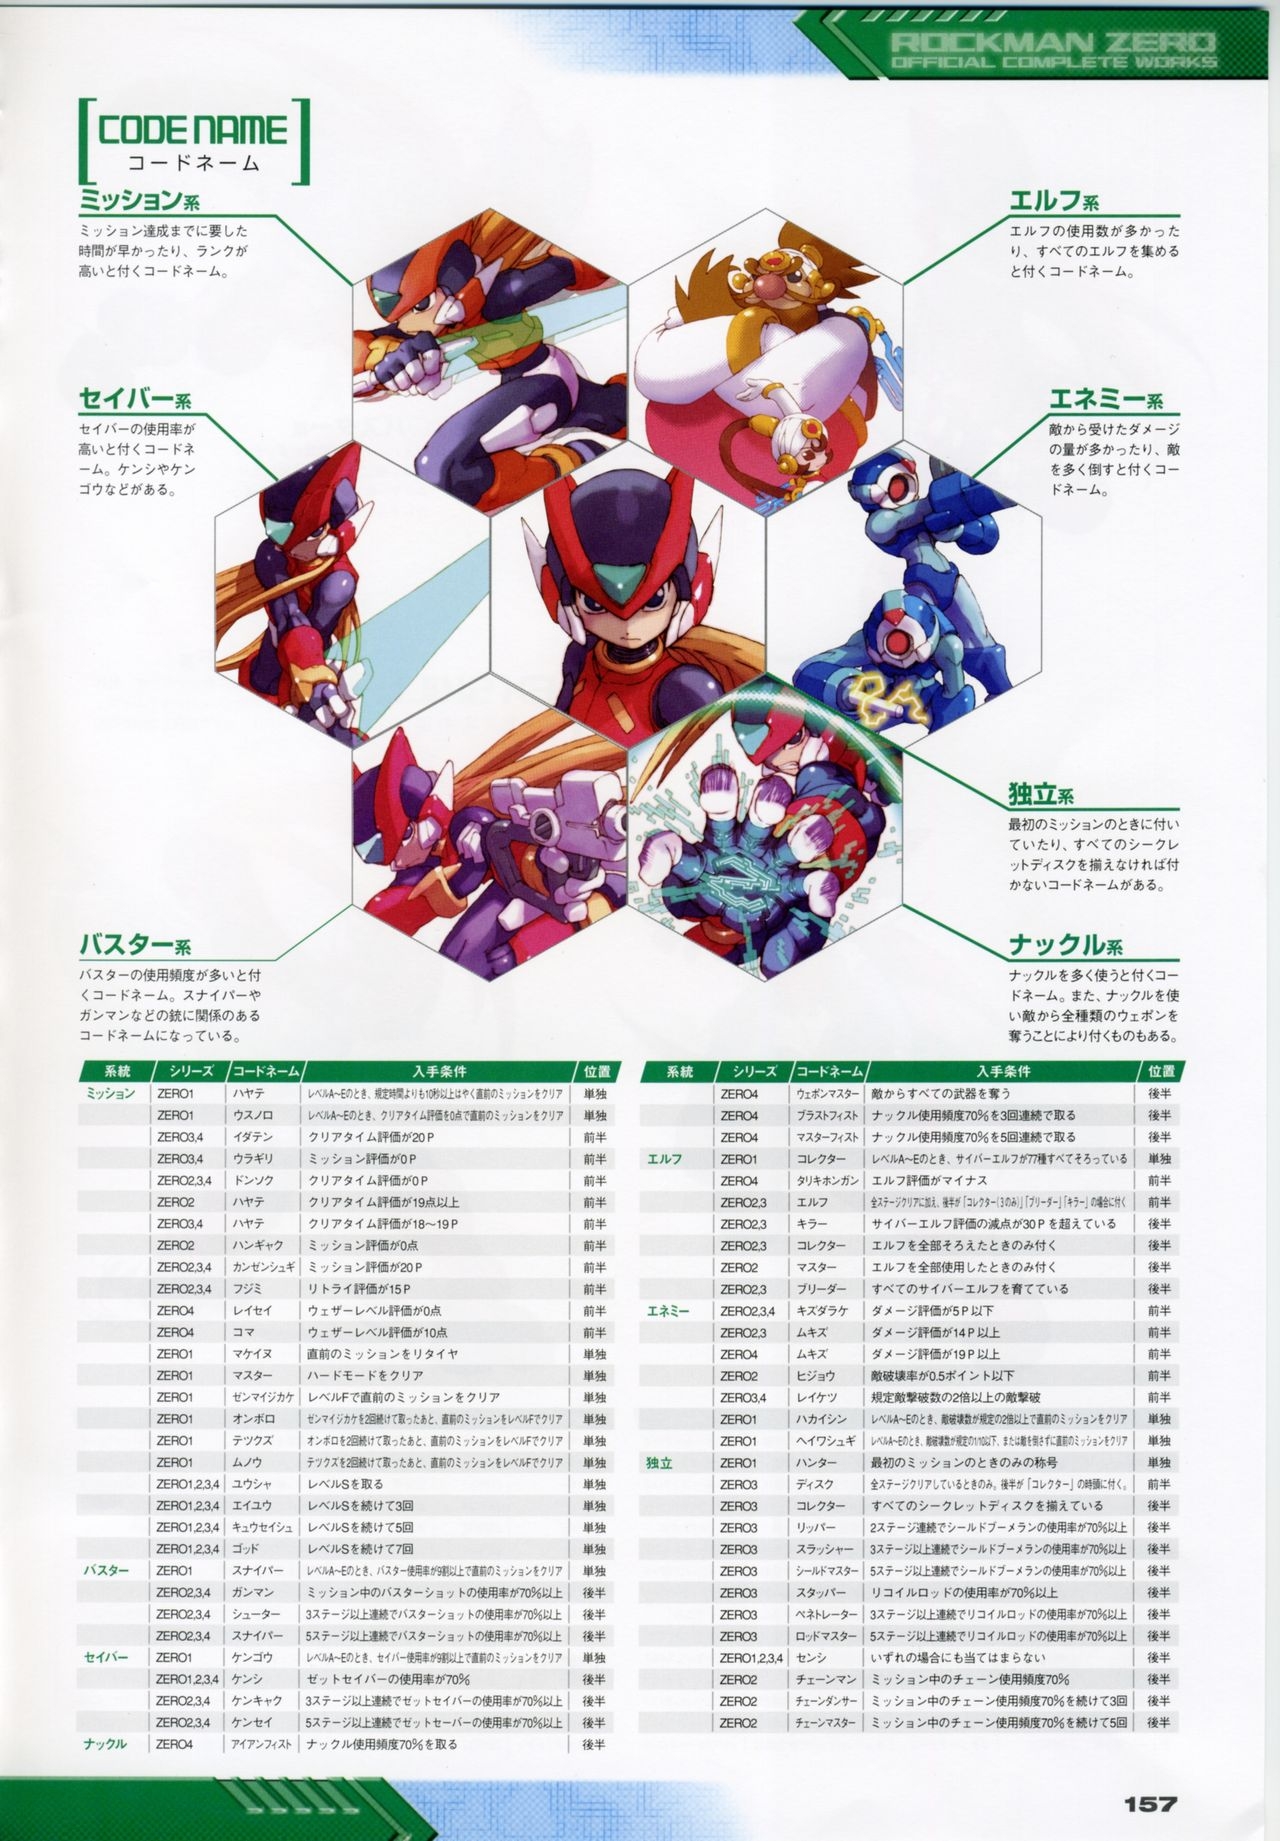 Rockman Zero Official Complete Works 160